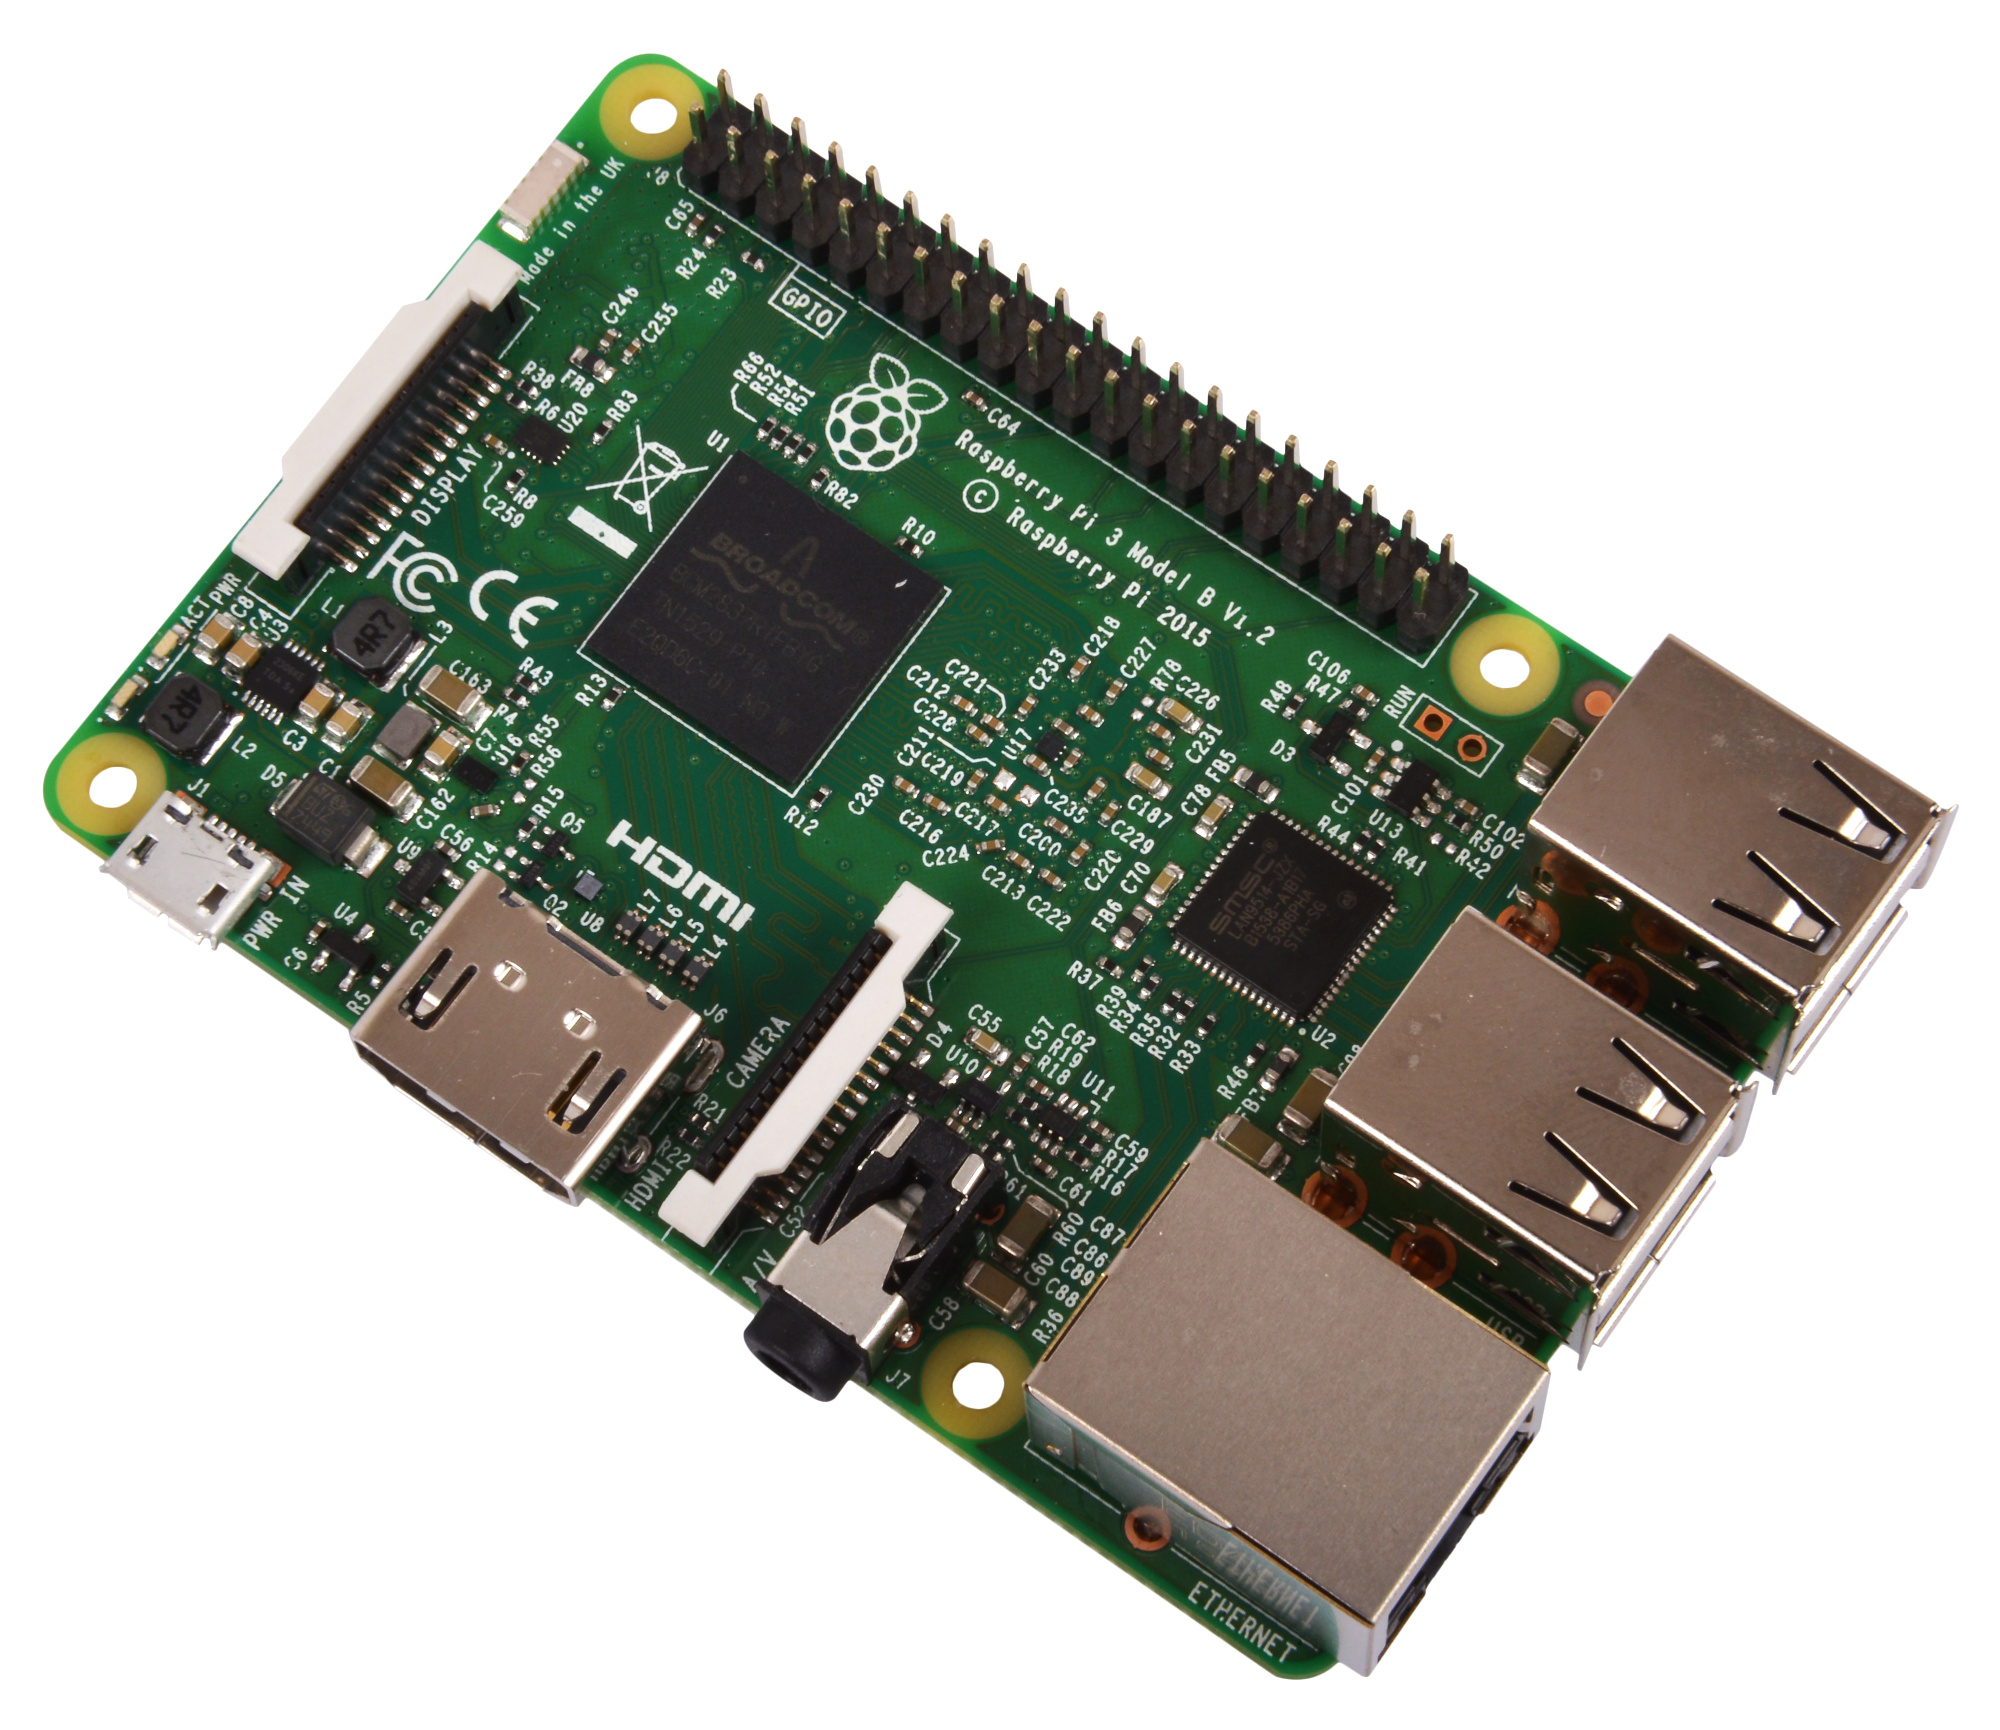 Introducing The Raspberry Pi 3 Model B Single Board Computer